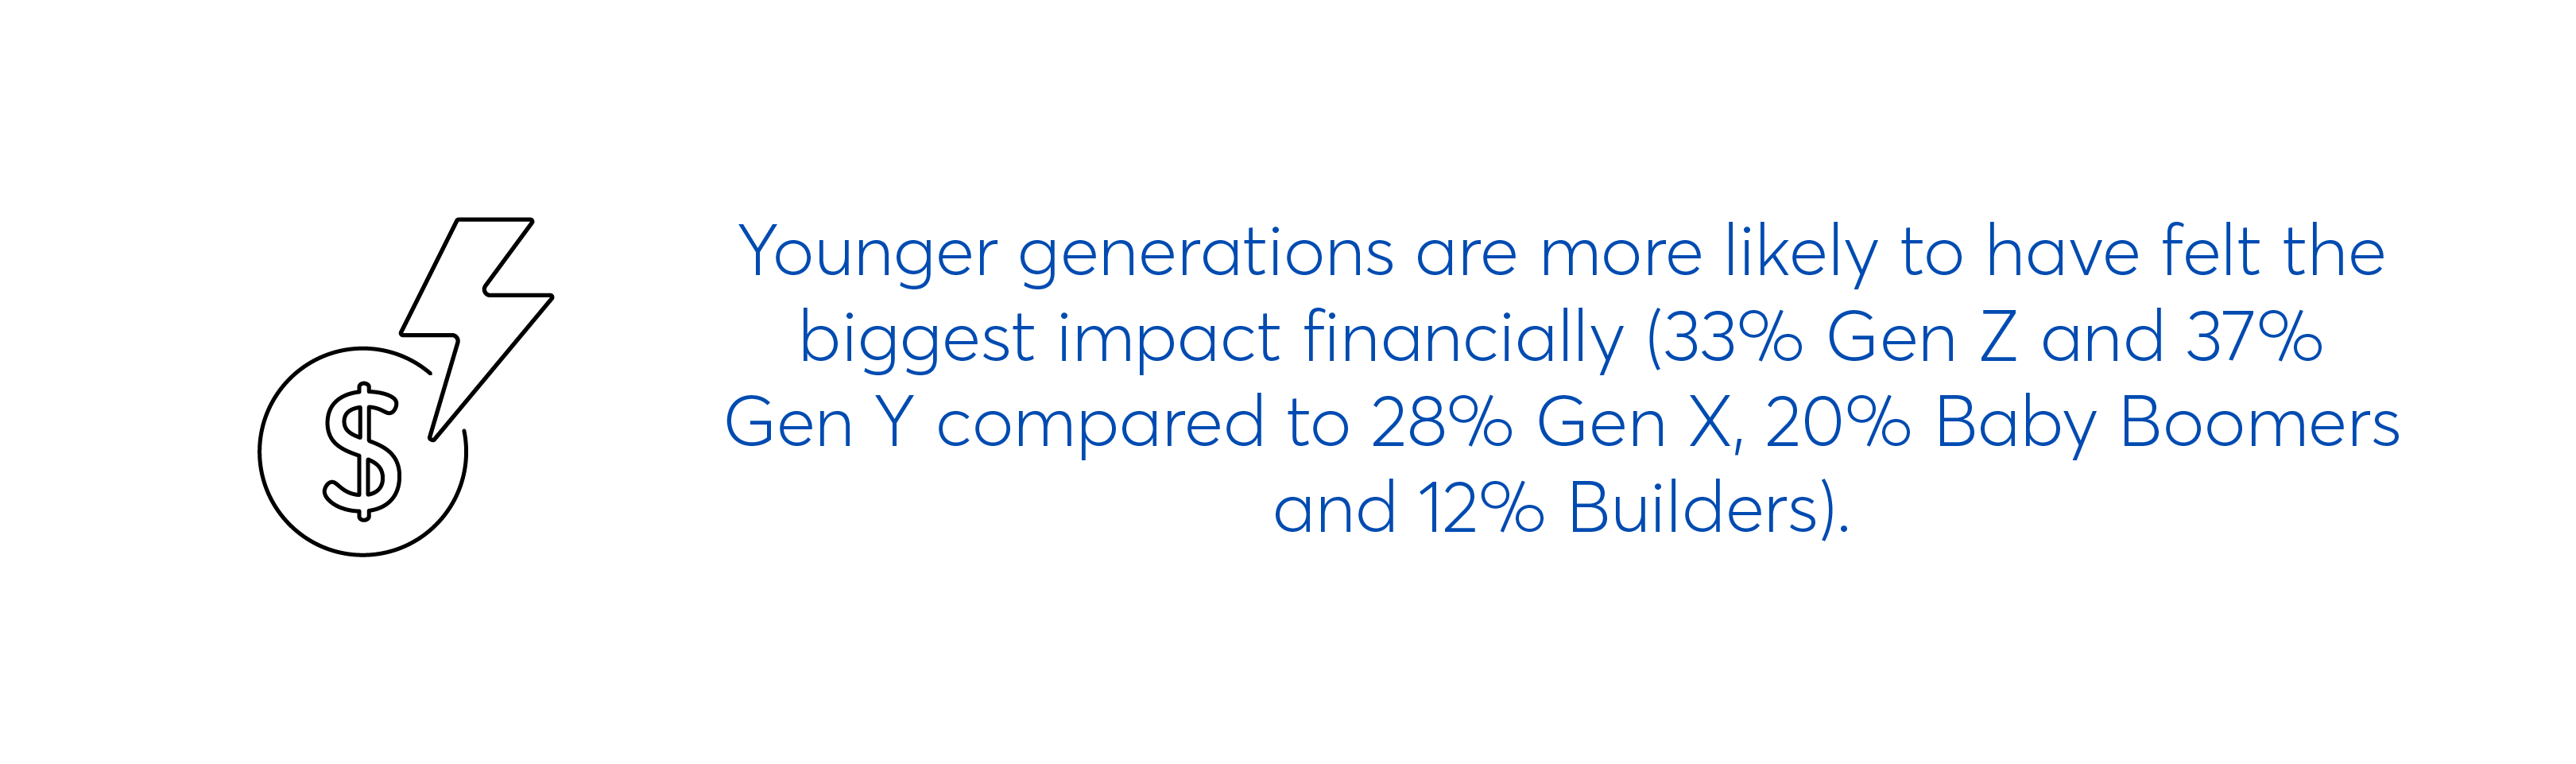 Emerging generations feeling the biggest financial impact